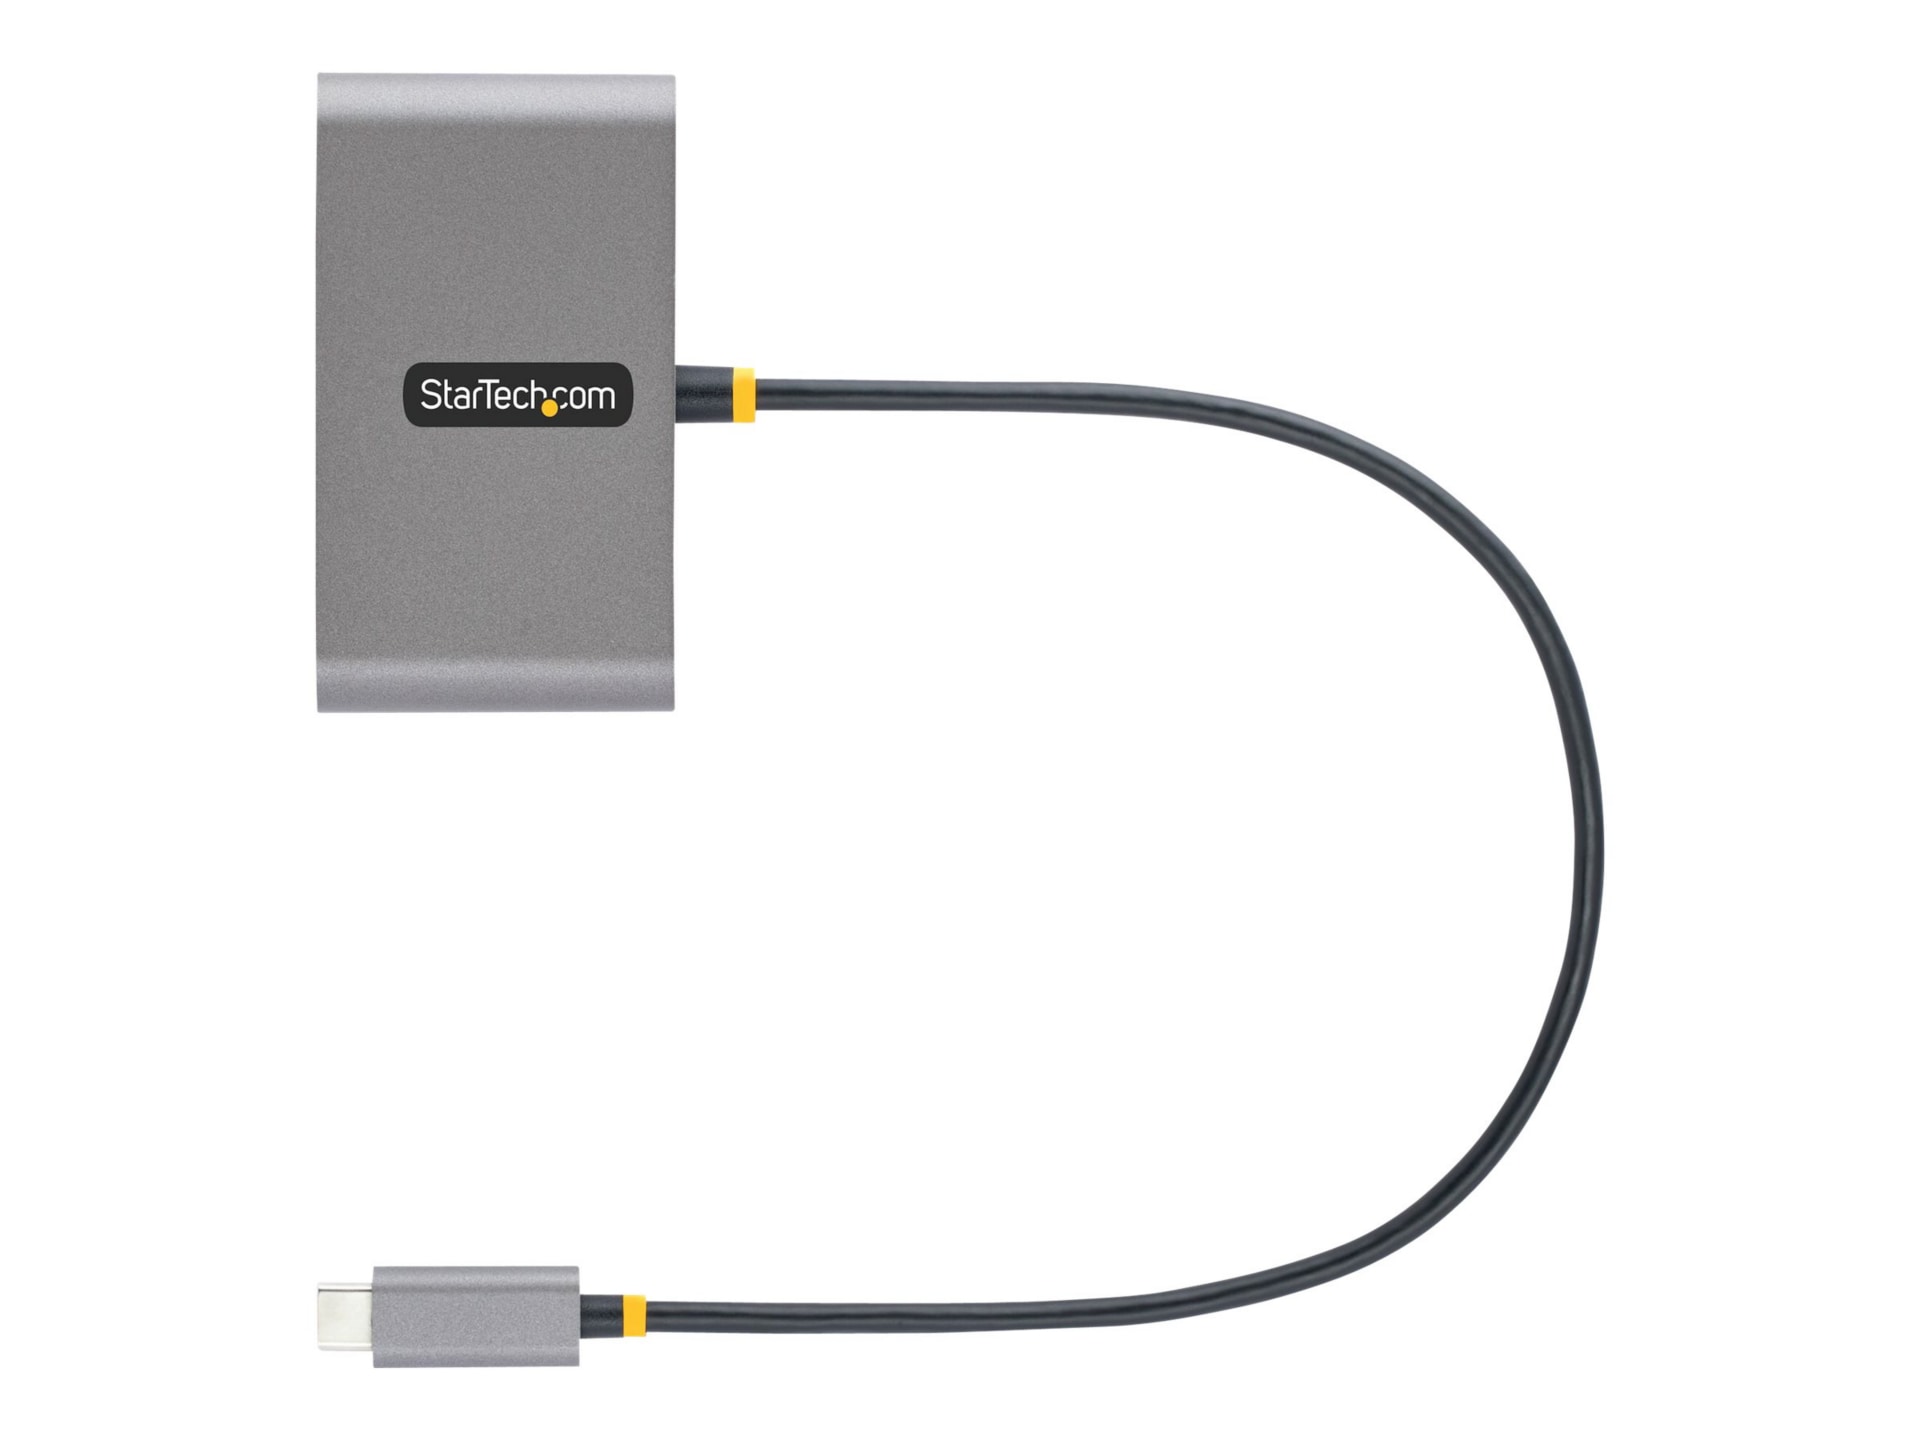 StarTech.com 4-Port USB-C Hub with 100W Power Delivery Pass-Through, 2x USB